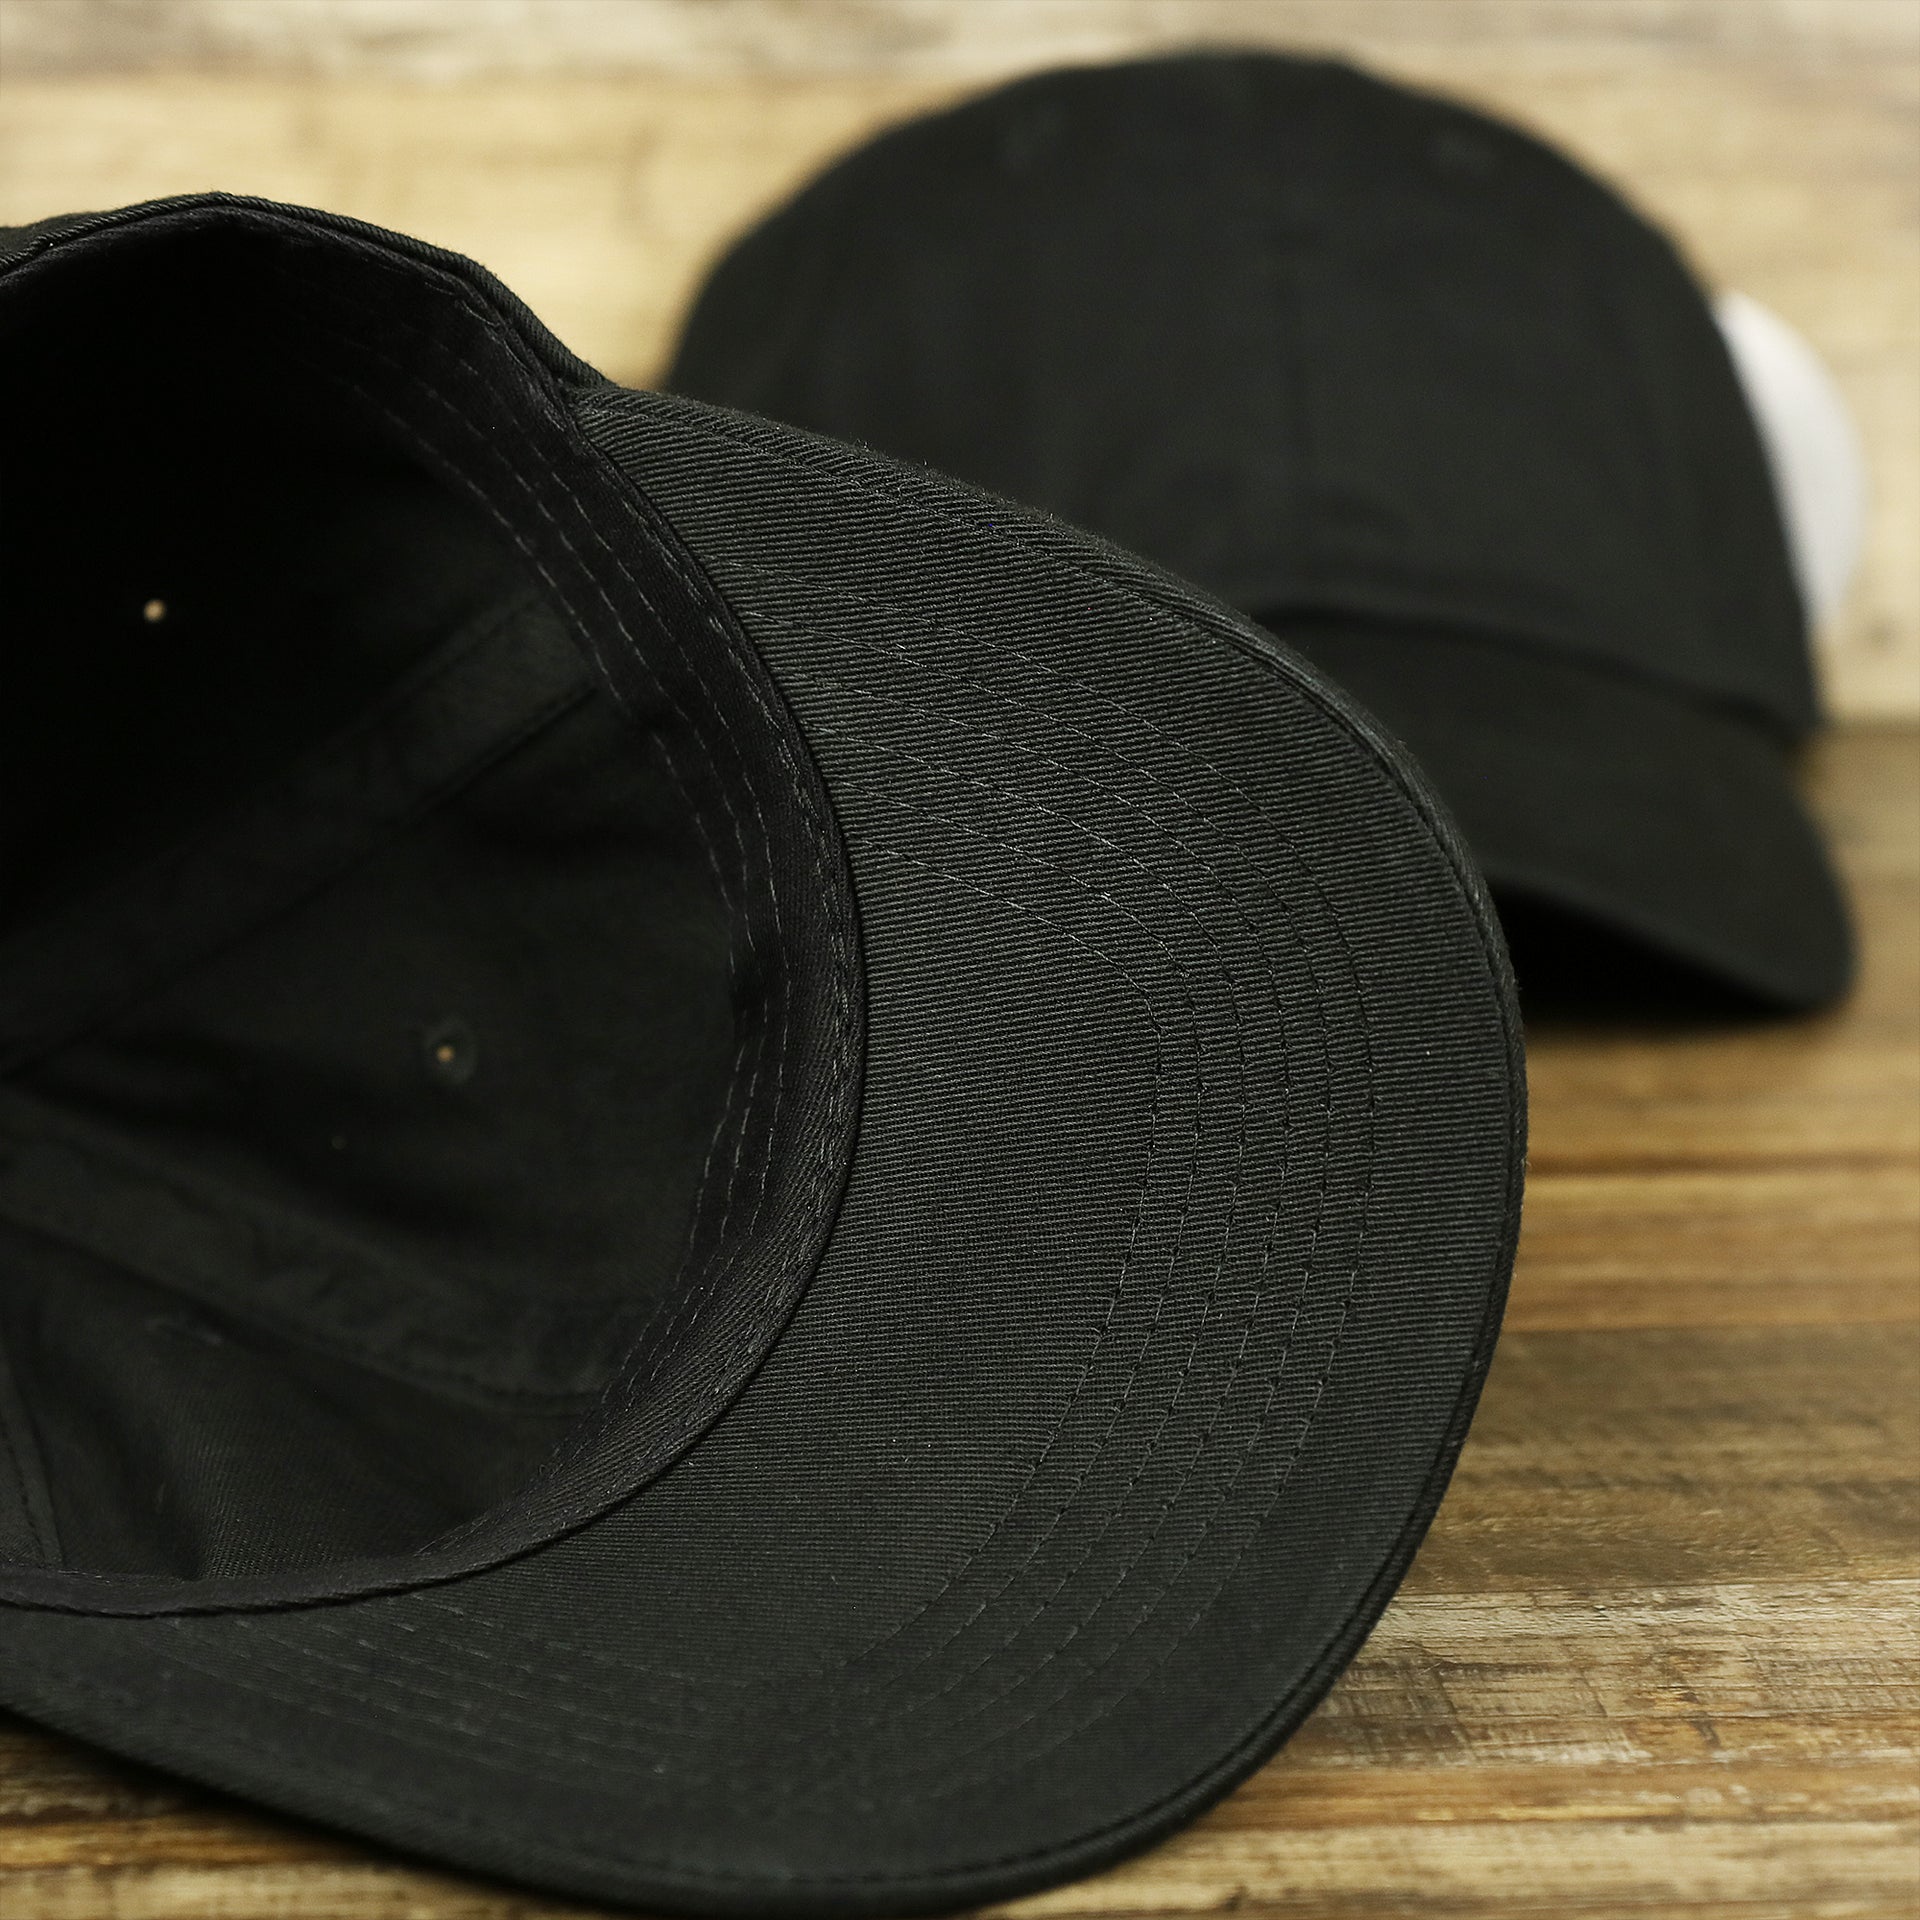 The undervisor on the Jet Black Blank Baseball Hat | Black Dad Hat